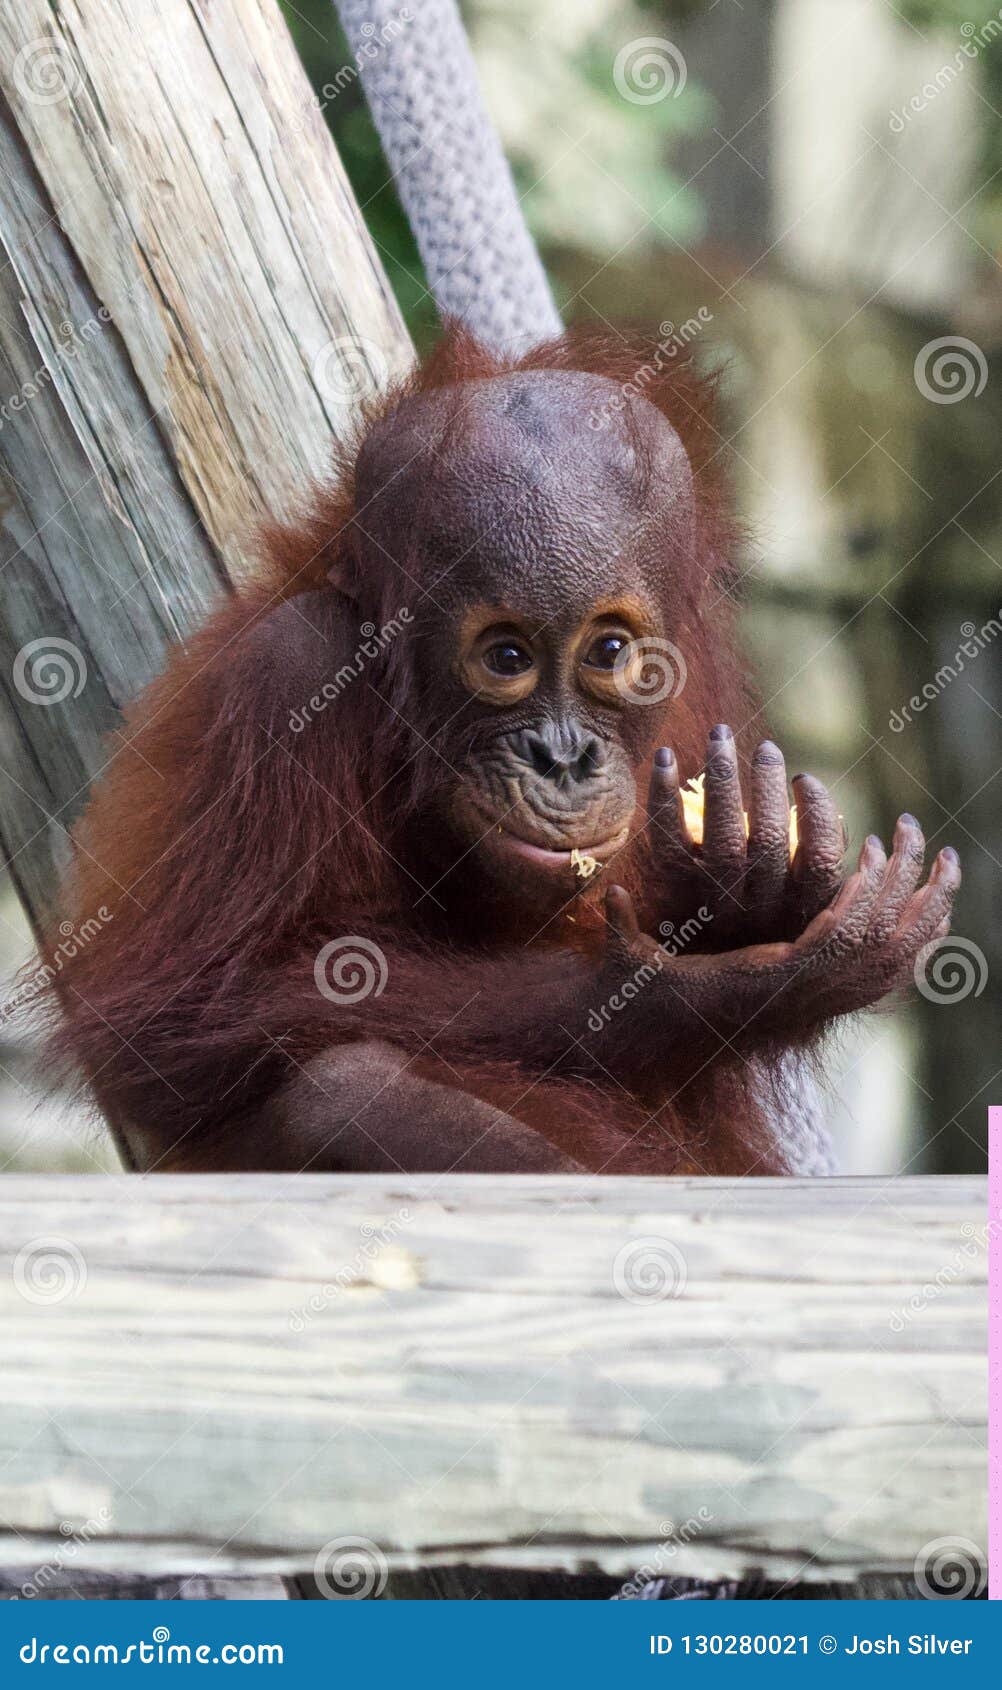 Baby orangutan stock image. Image of eyes, monkey, orangutan - 130280021